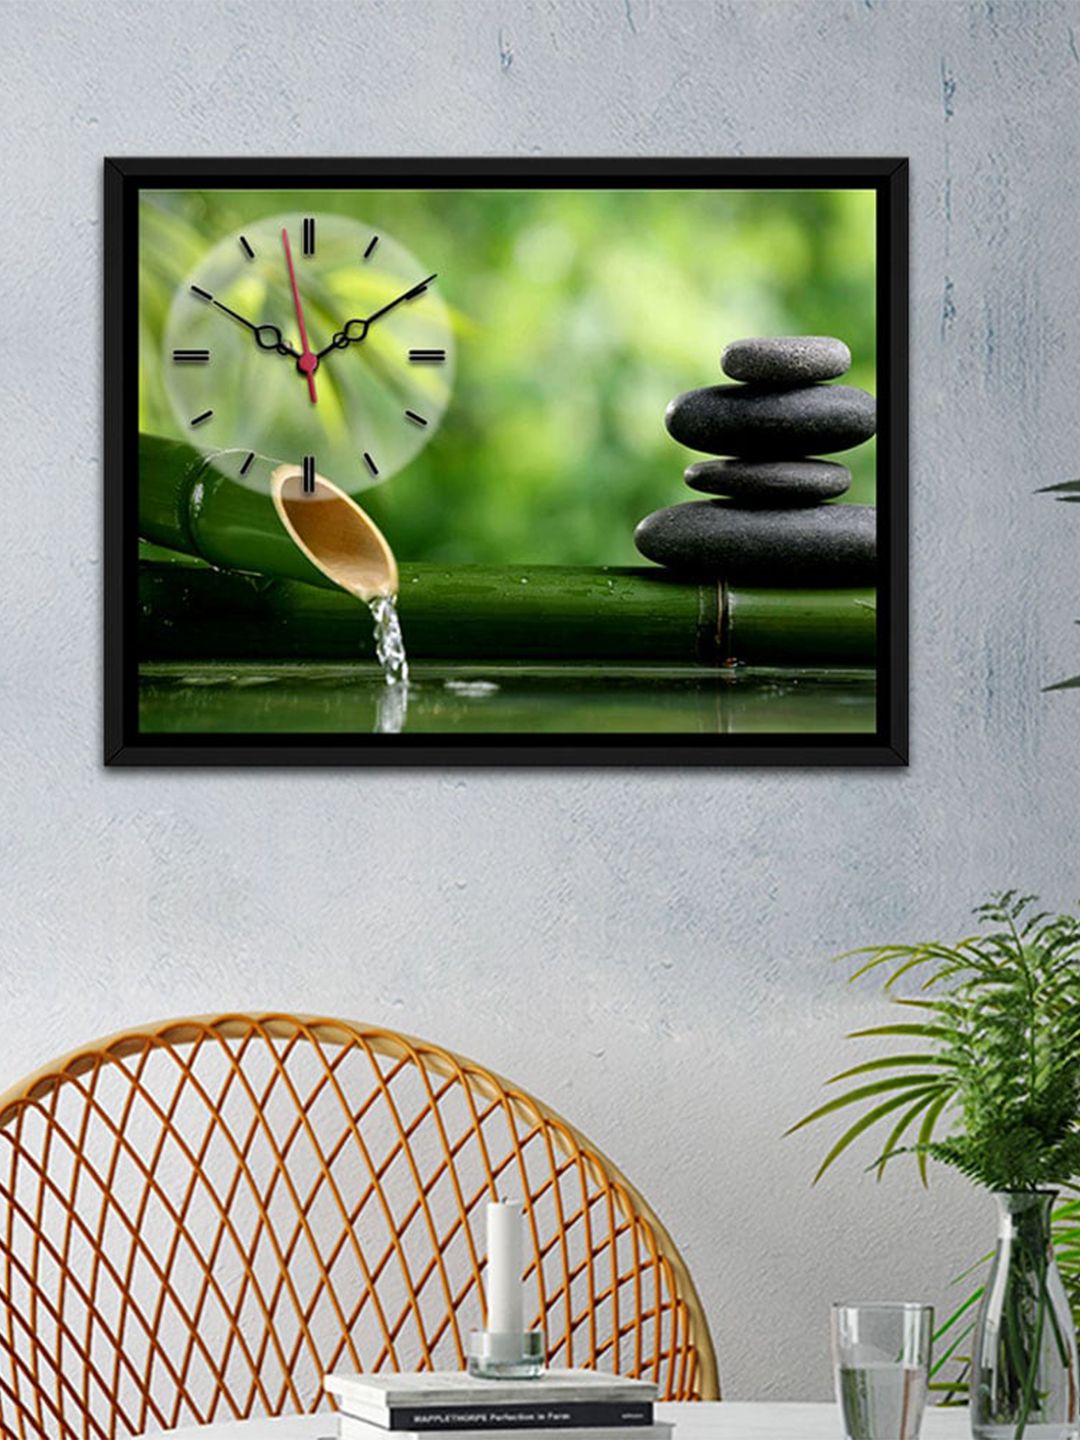 WALLMANTRA Green & Grey Printed Contemporary Wall Clock Price in India